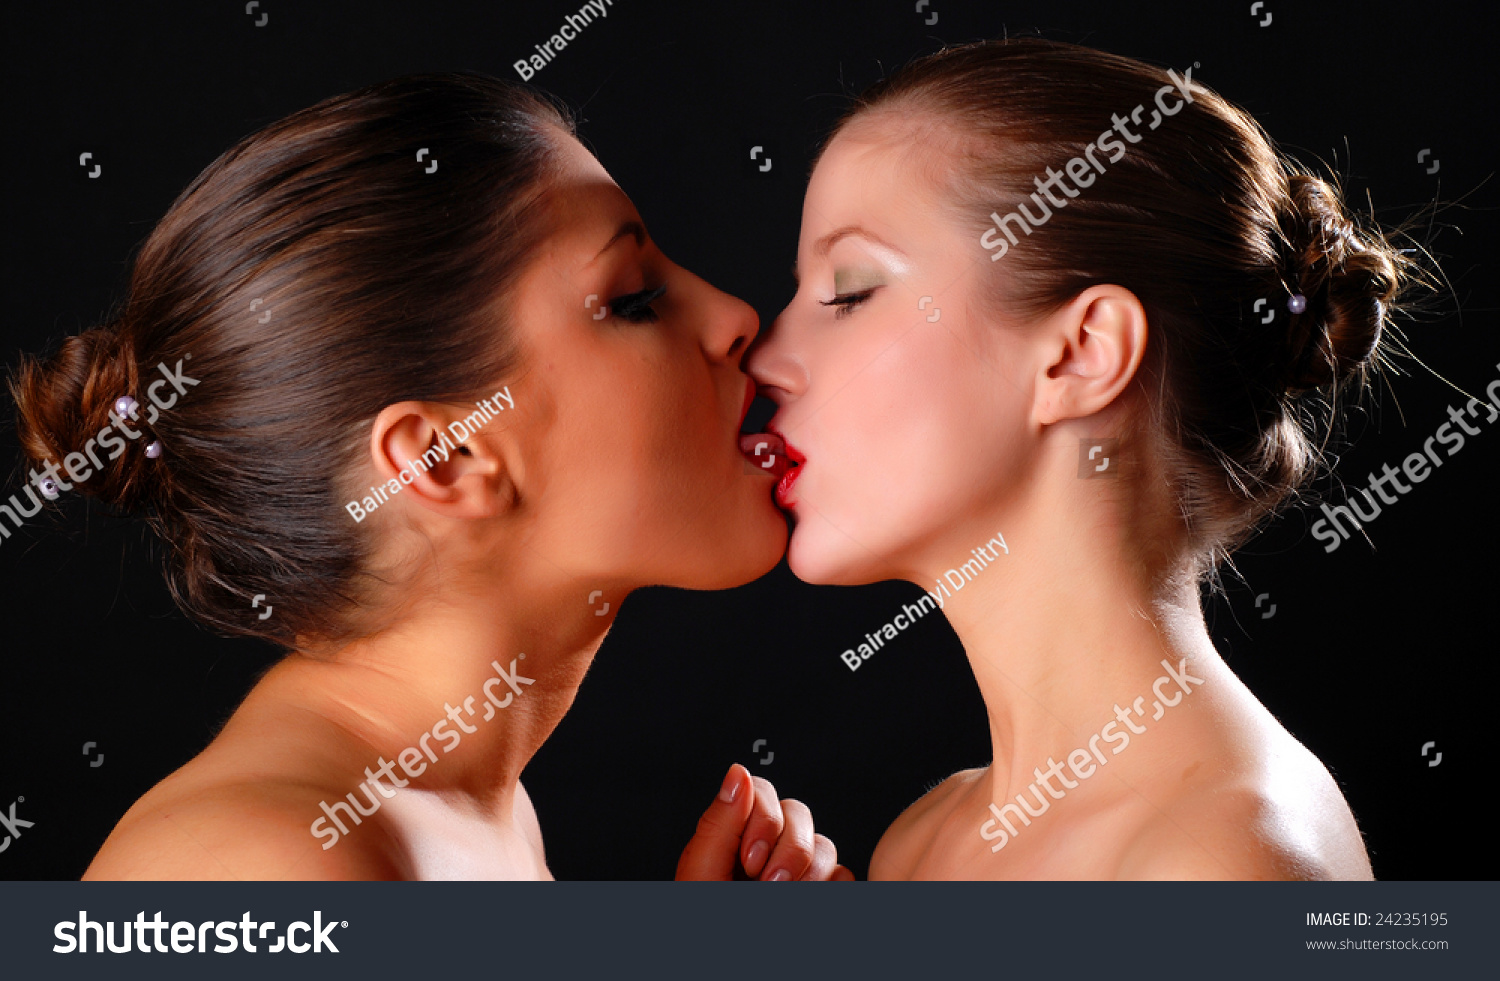 Beautiful Ladys Kiss and Sex